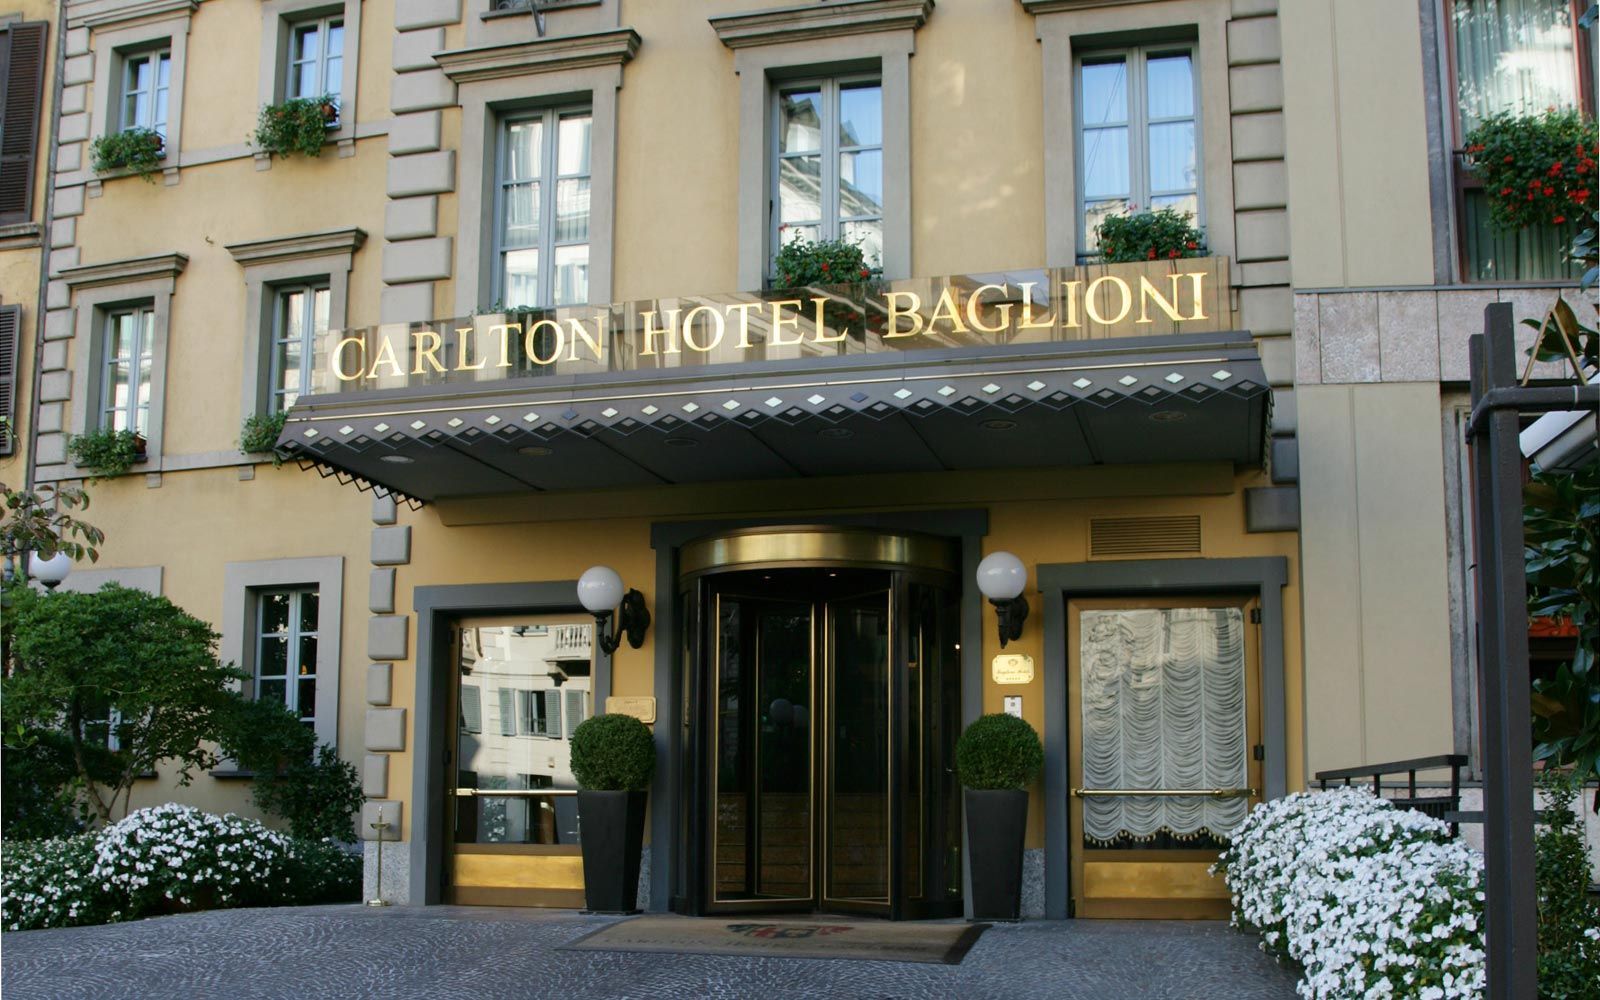 8-carlton-hotel-baglioni-best-luxury-hotels-i